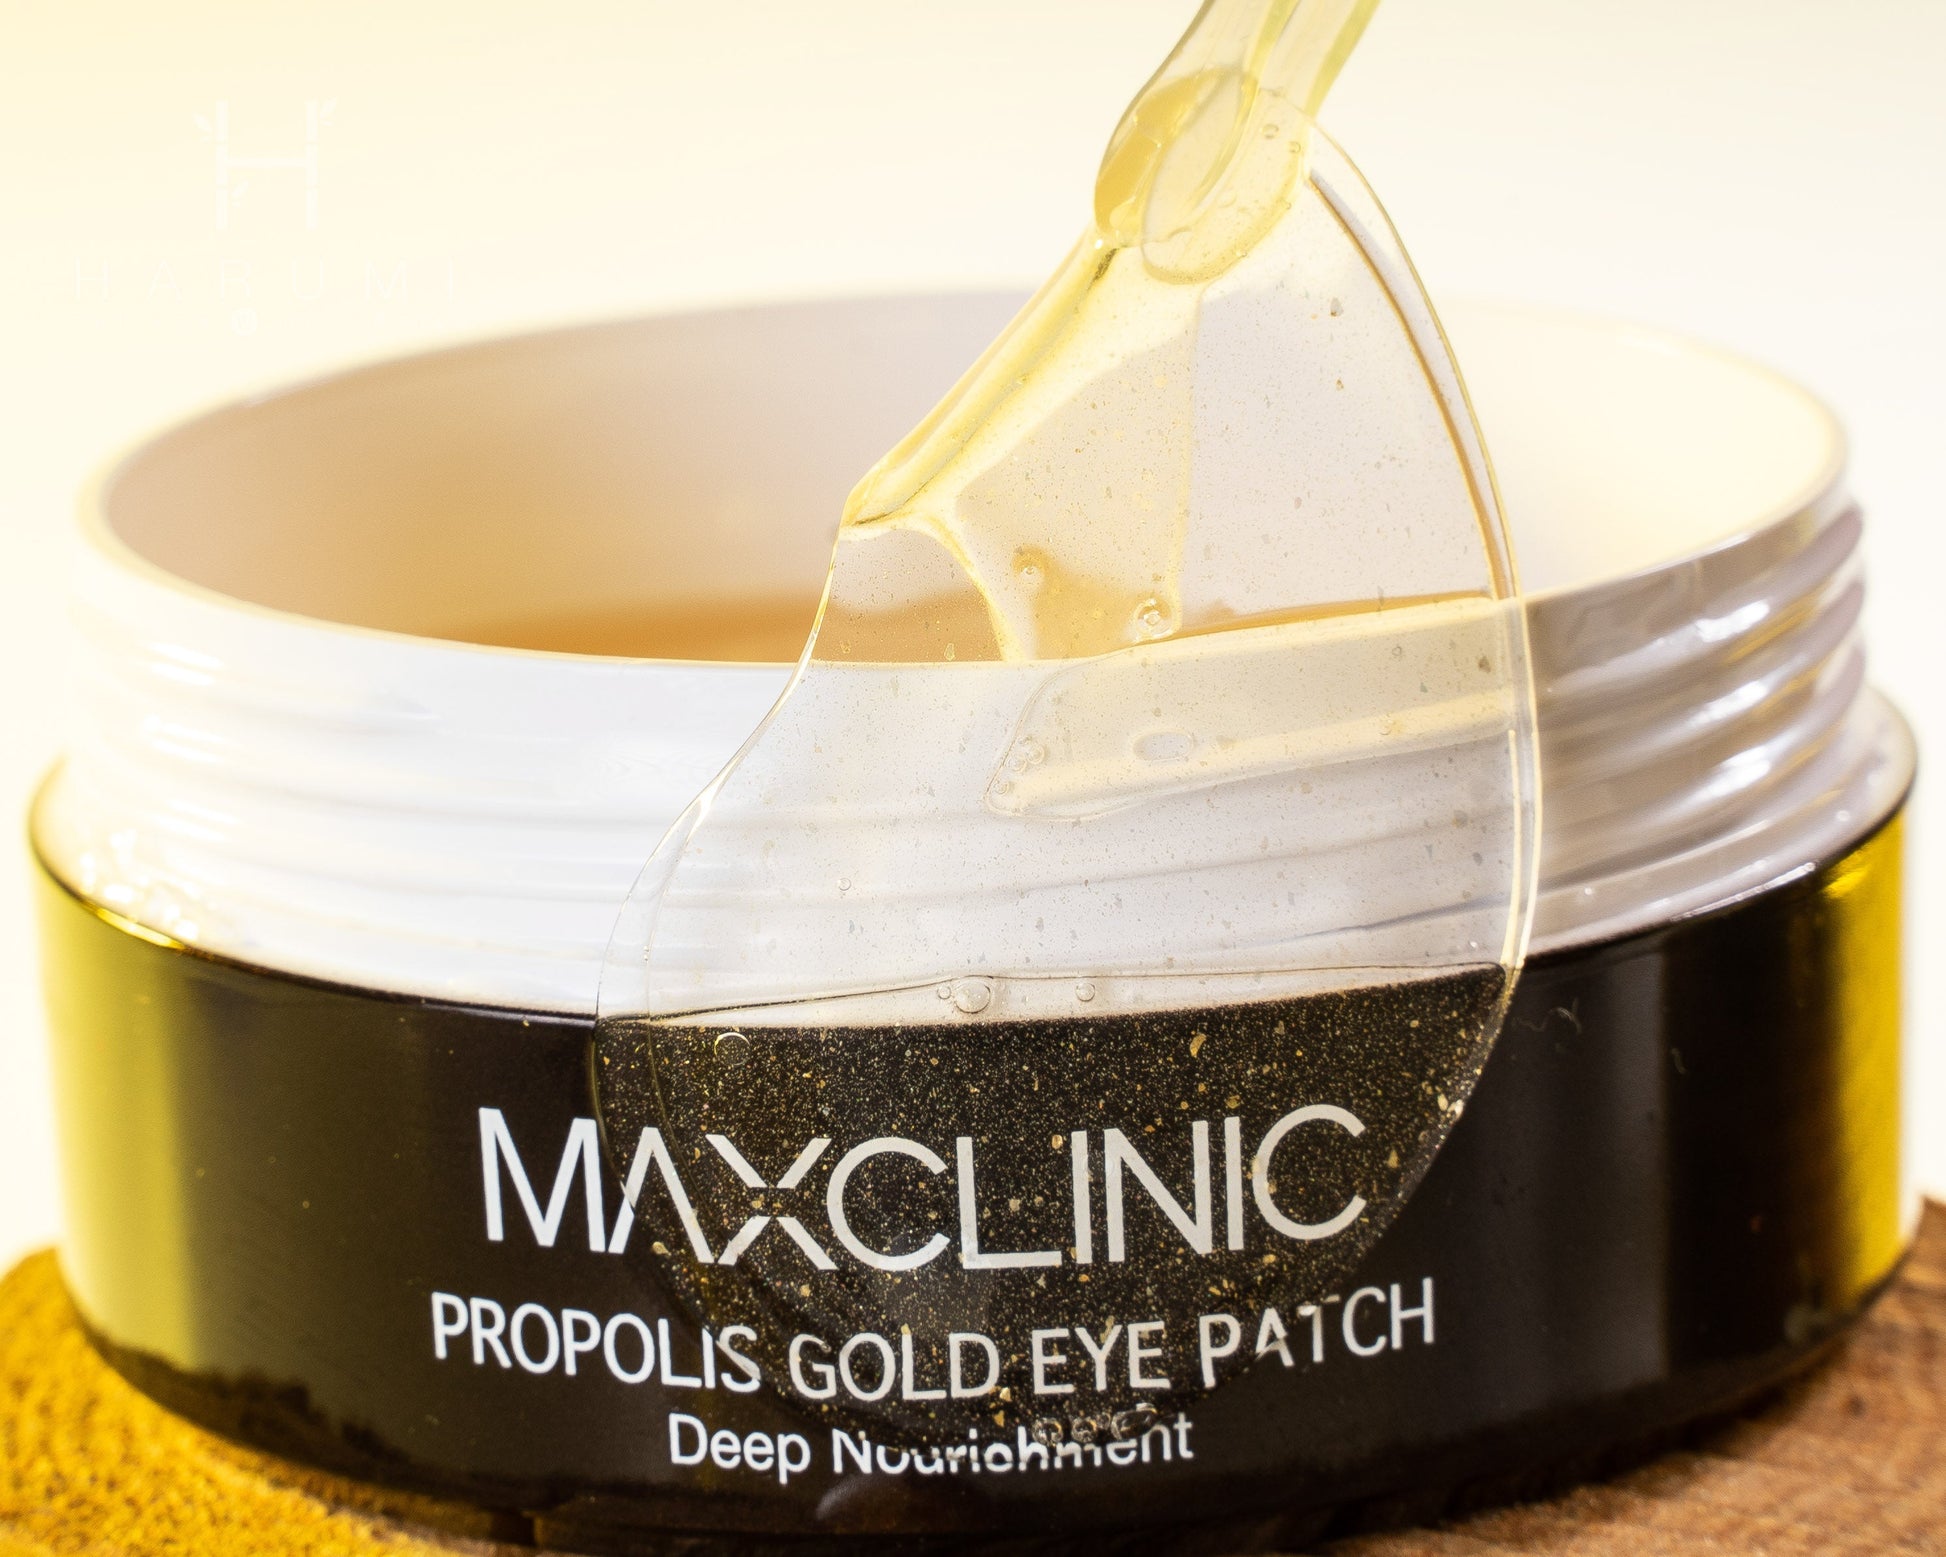 Maxclinic Propolis Gold Eye Patch Skincare maquillaje productos de belleza coreanos en Colombia kbeauty